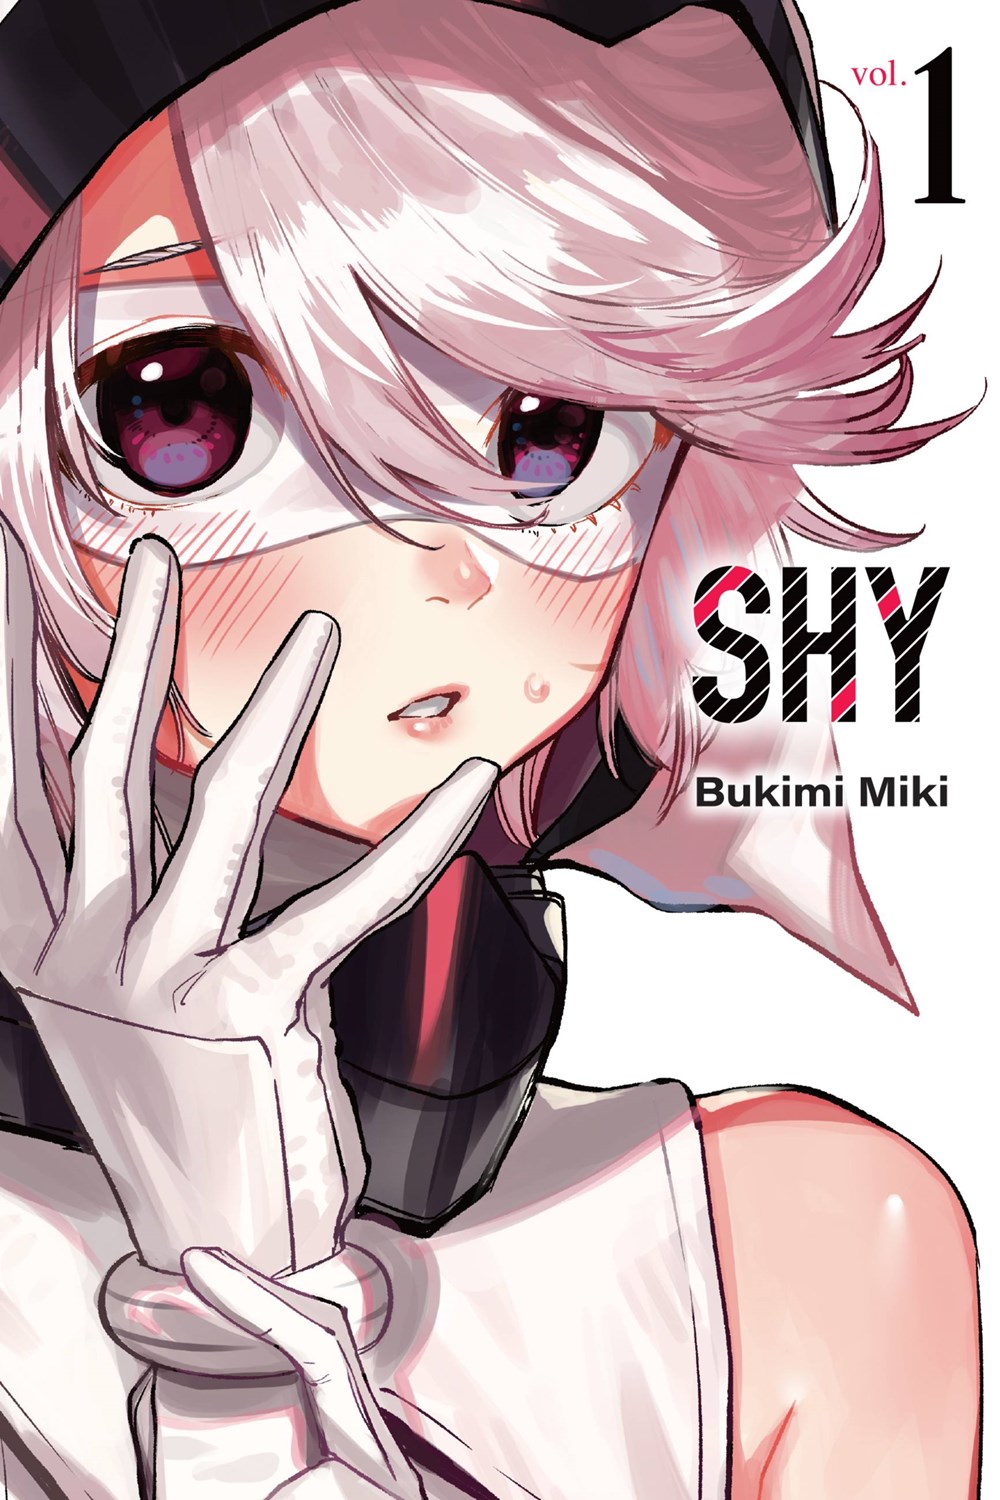 Shy Volume 1 Manga Review